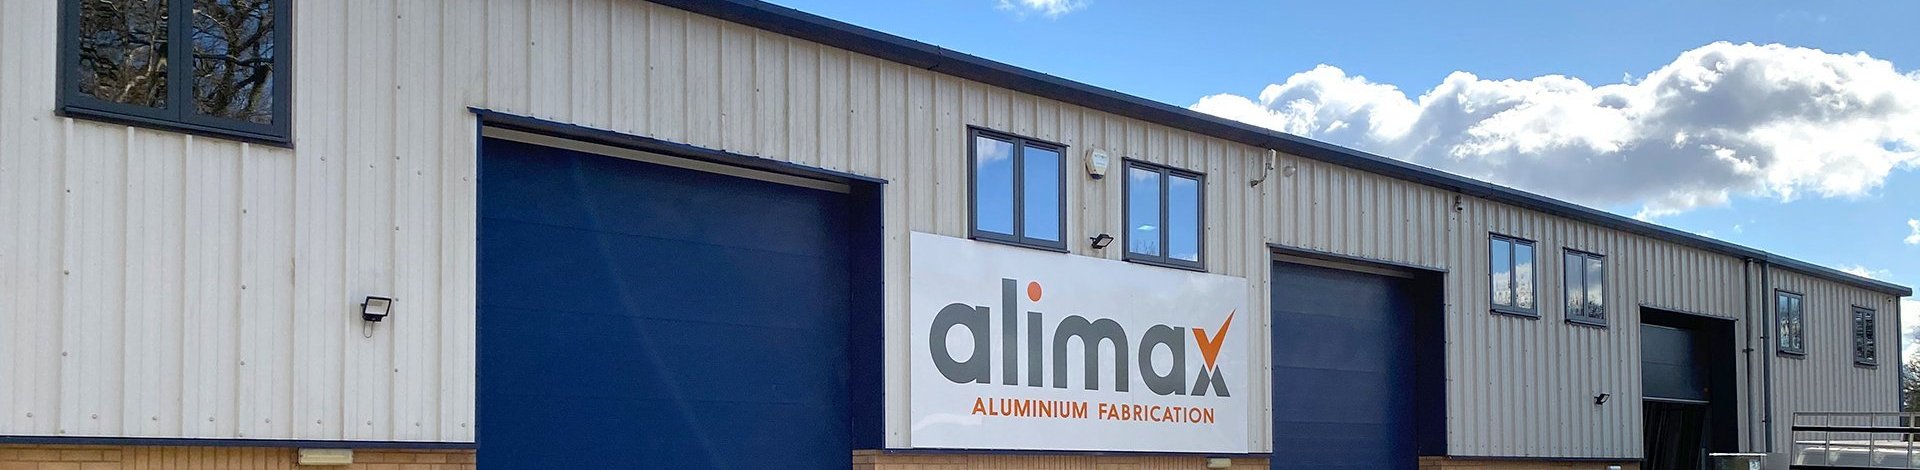 Alimax Warehouse